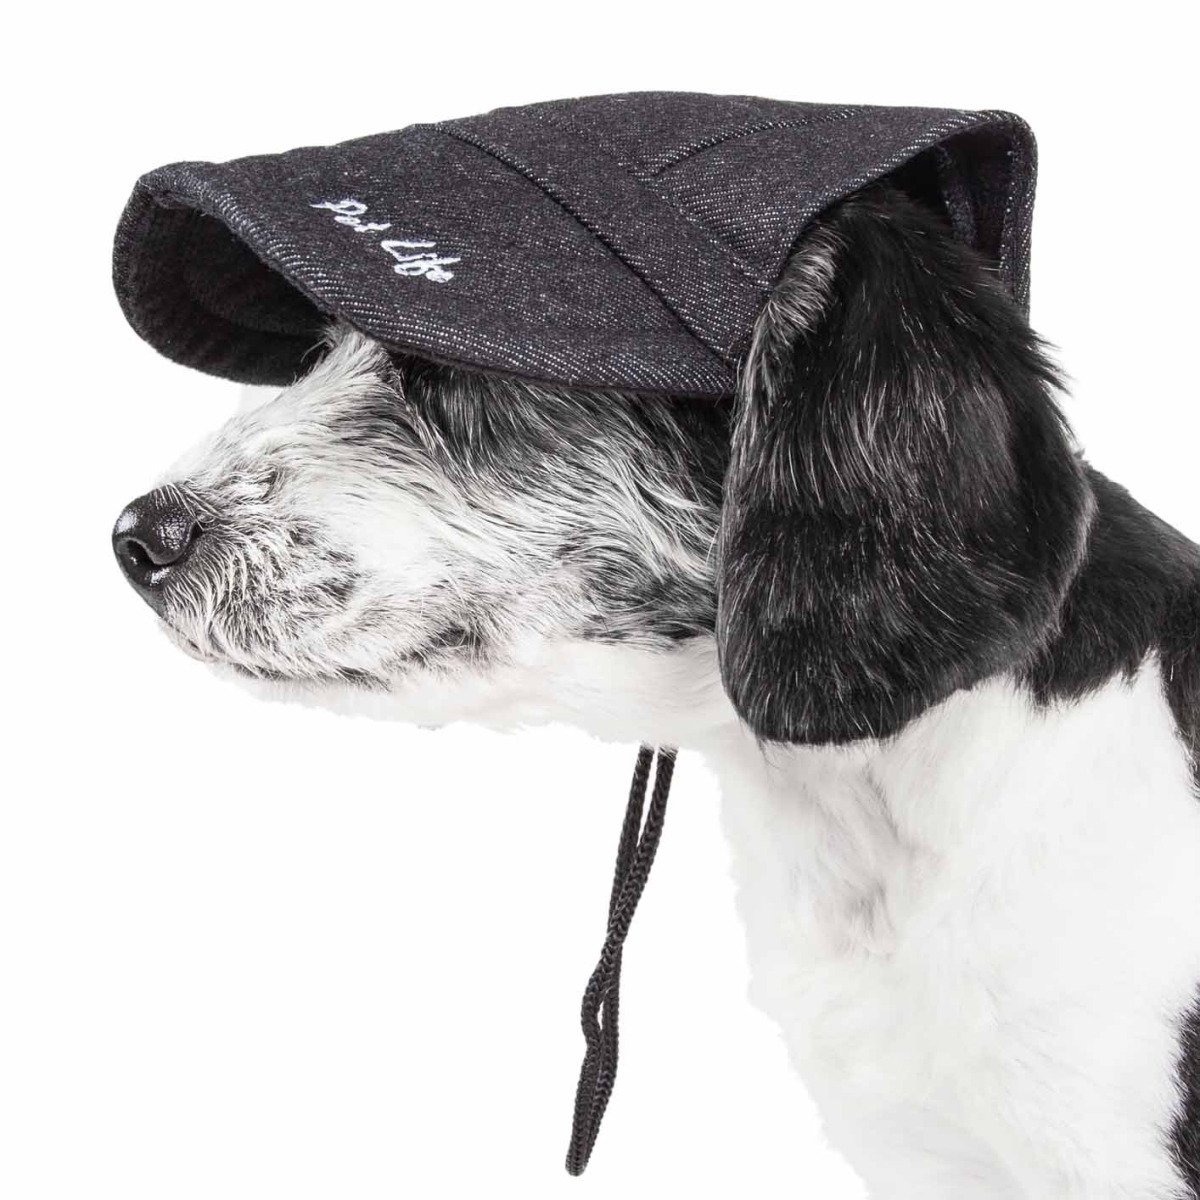 Picture of Pet Life HT6FBKLG Cap-Tivating UV Protectant Adjustable Fashion Dog Hat - Faded Black, Large